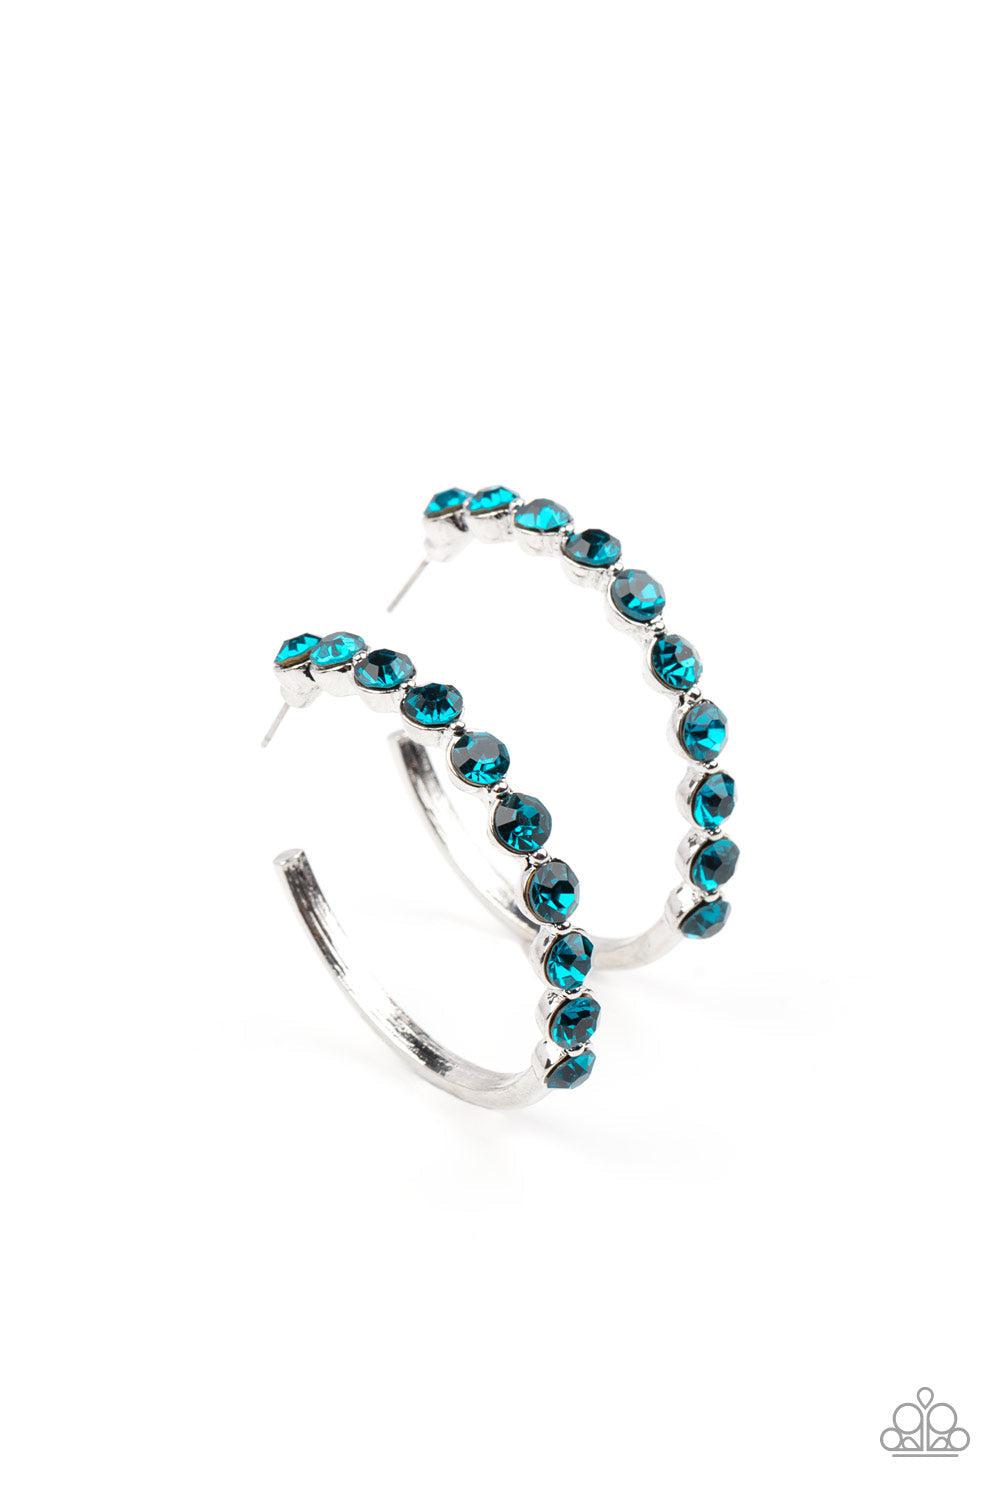 Photo Finish Blue Rhinestone Hoop Earrings - Paparazzi Accessories- lightbox - CarasShop.com - $5 Jewelry by Cara Jewels